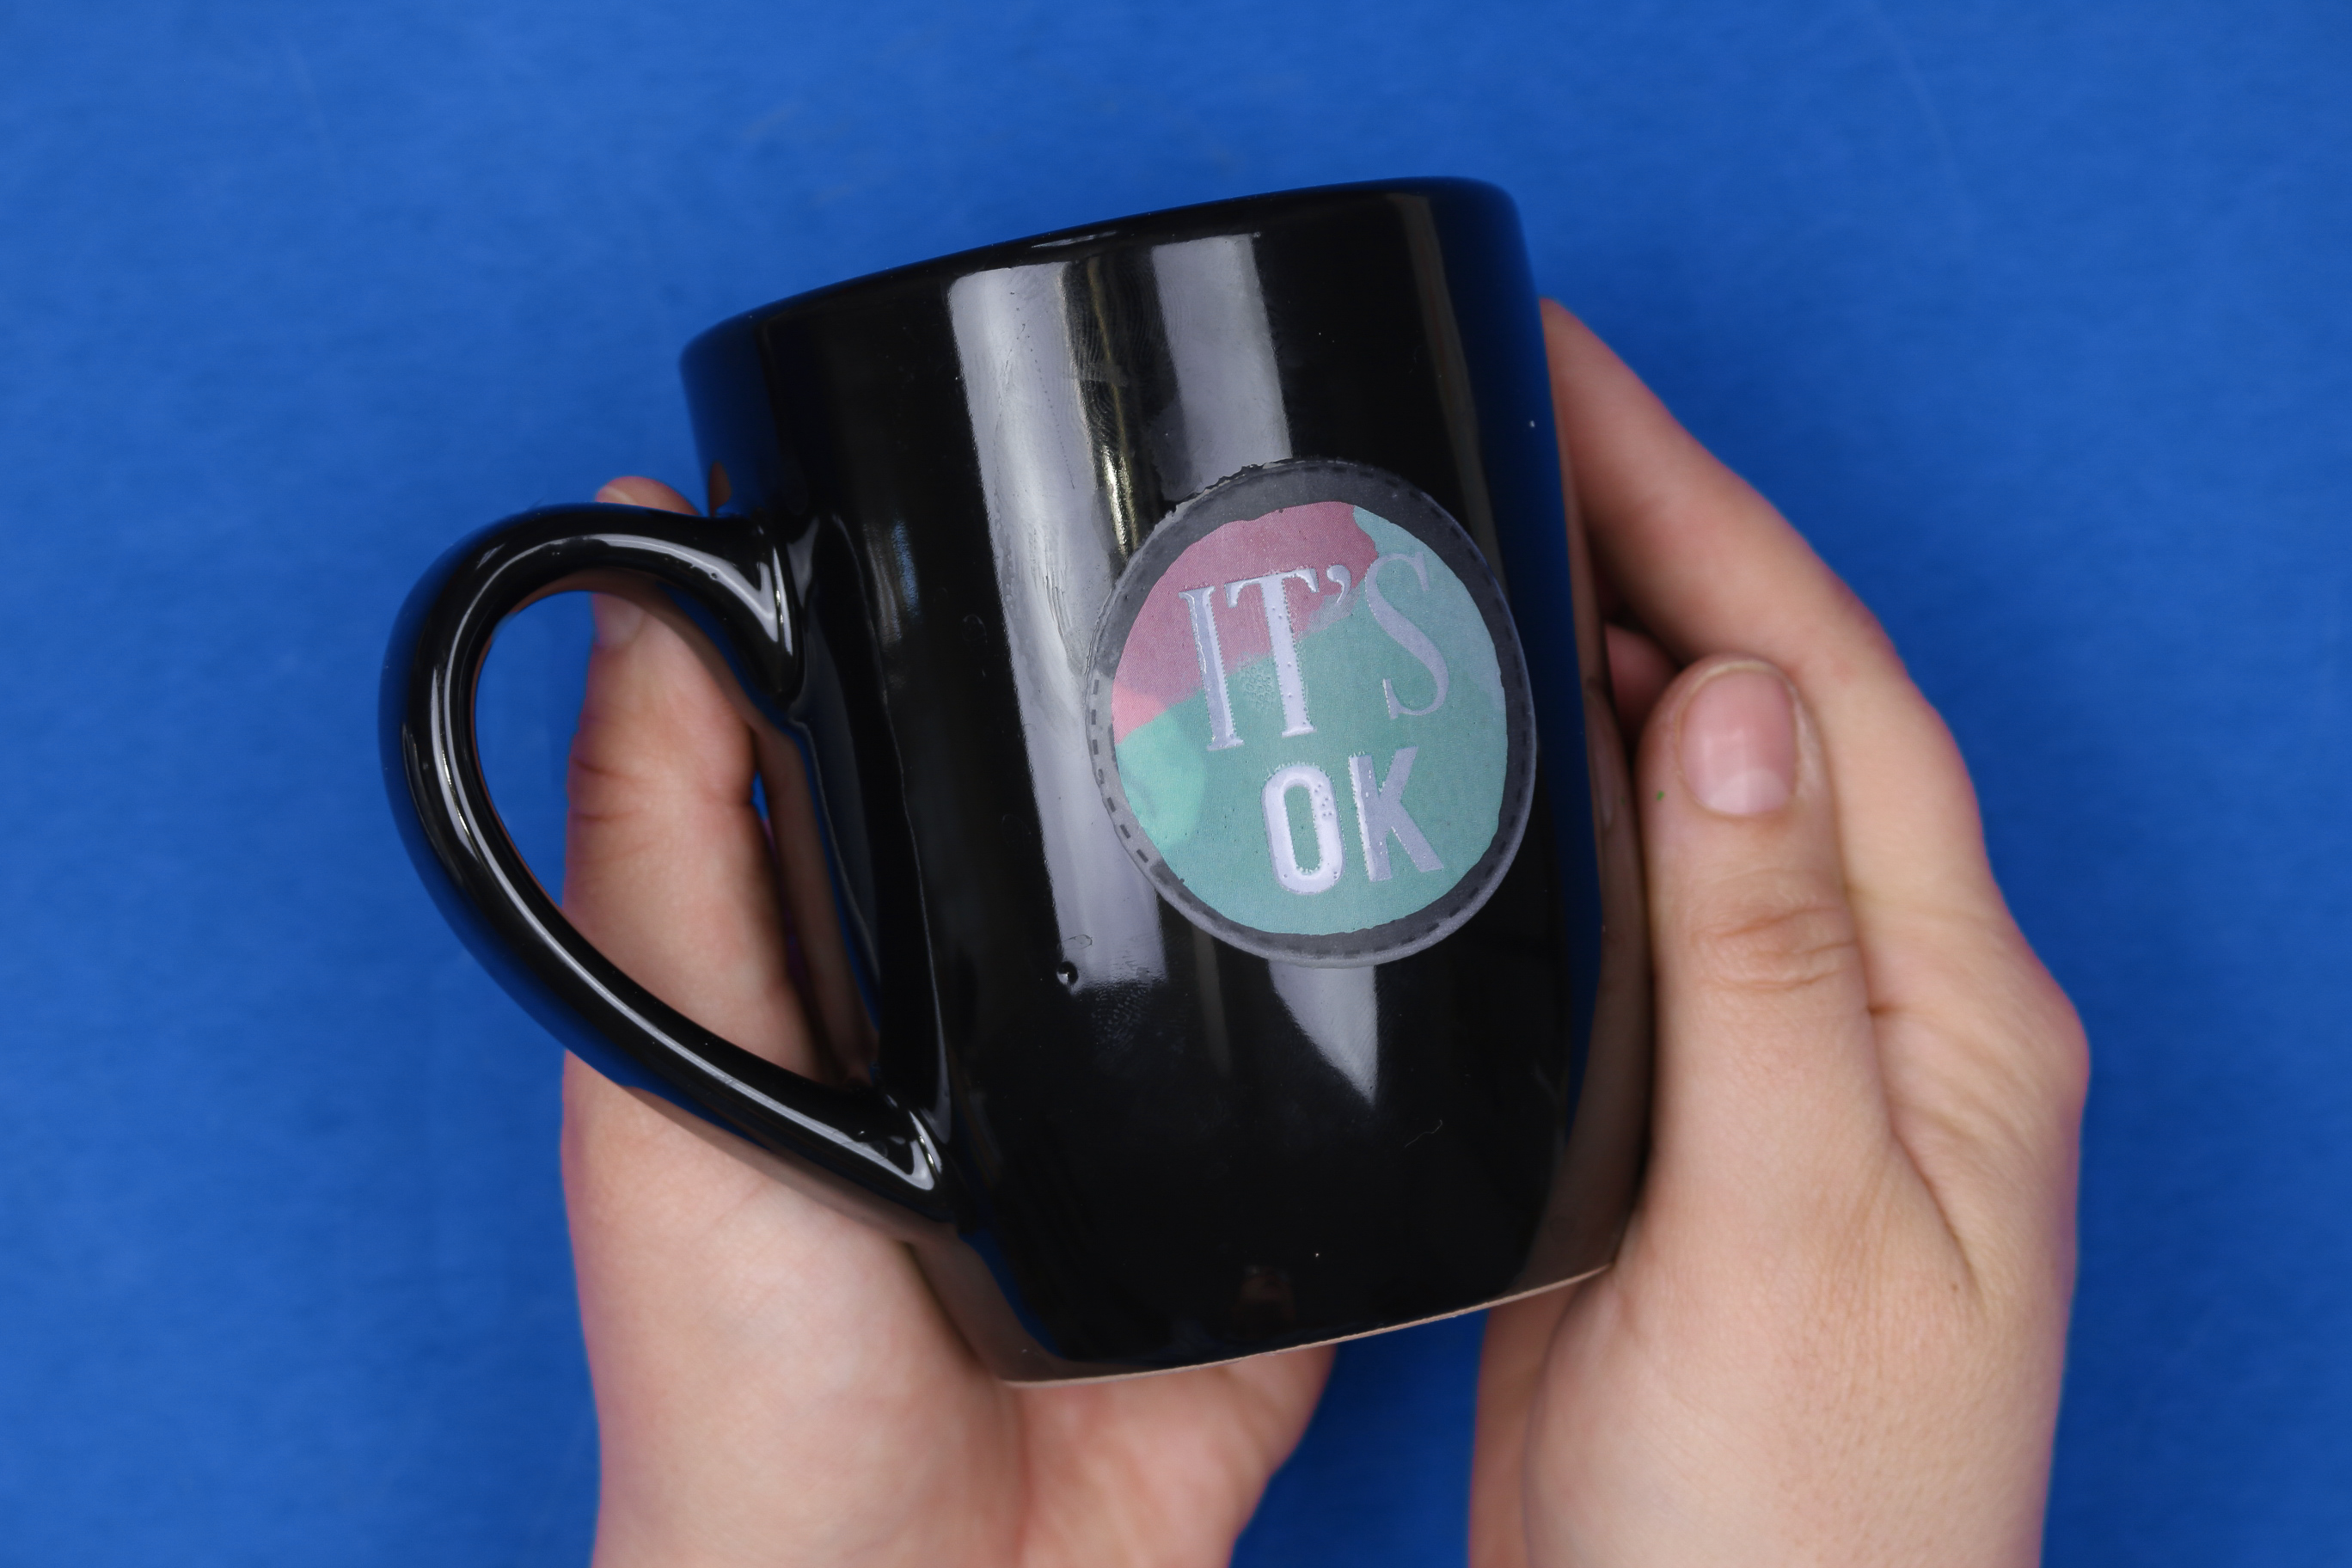 hand holding black mug with "It's OK" sticker